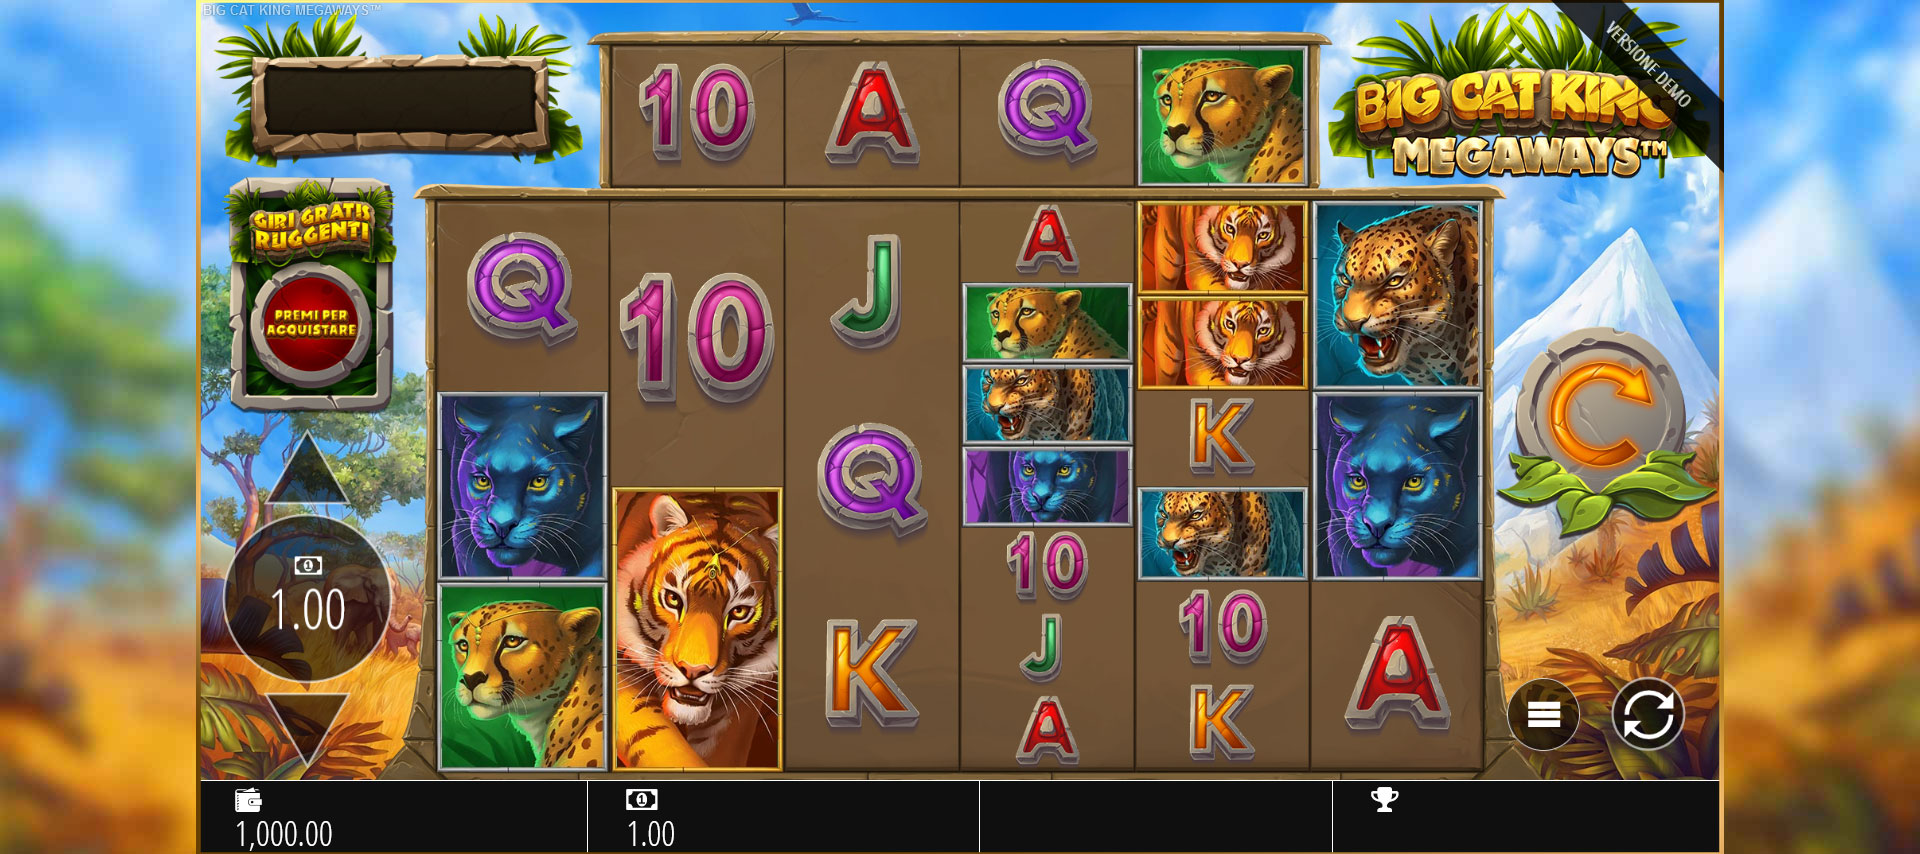 griglia di gioco della slot online Big Cat King Megaways